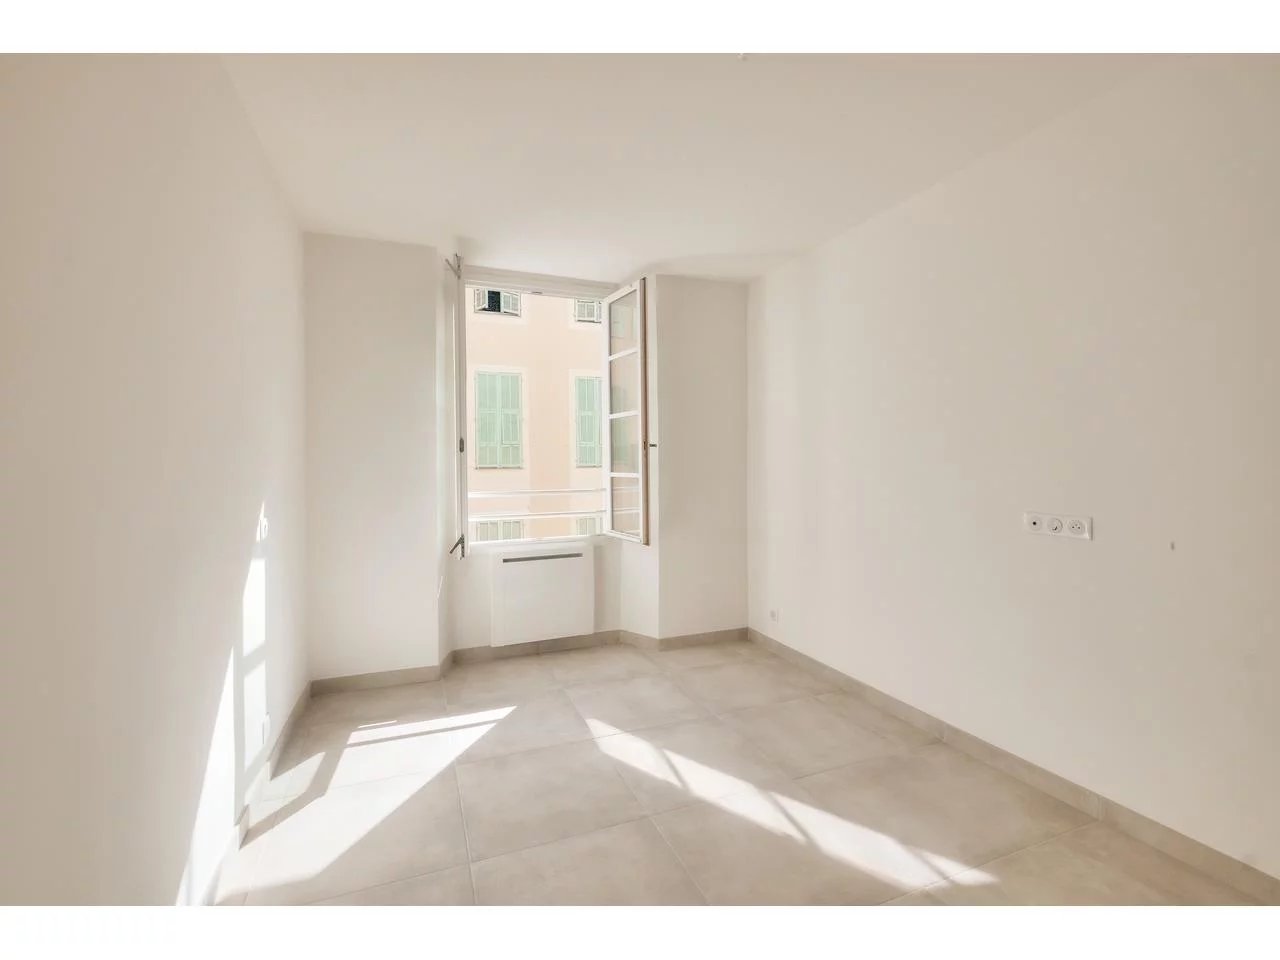 Appartement  5 Locali 110.63m2  In vendita   860 000 €